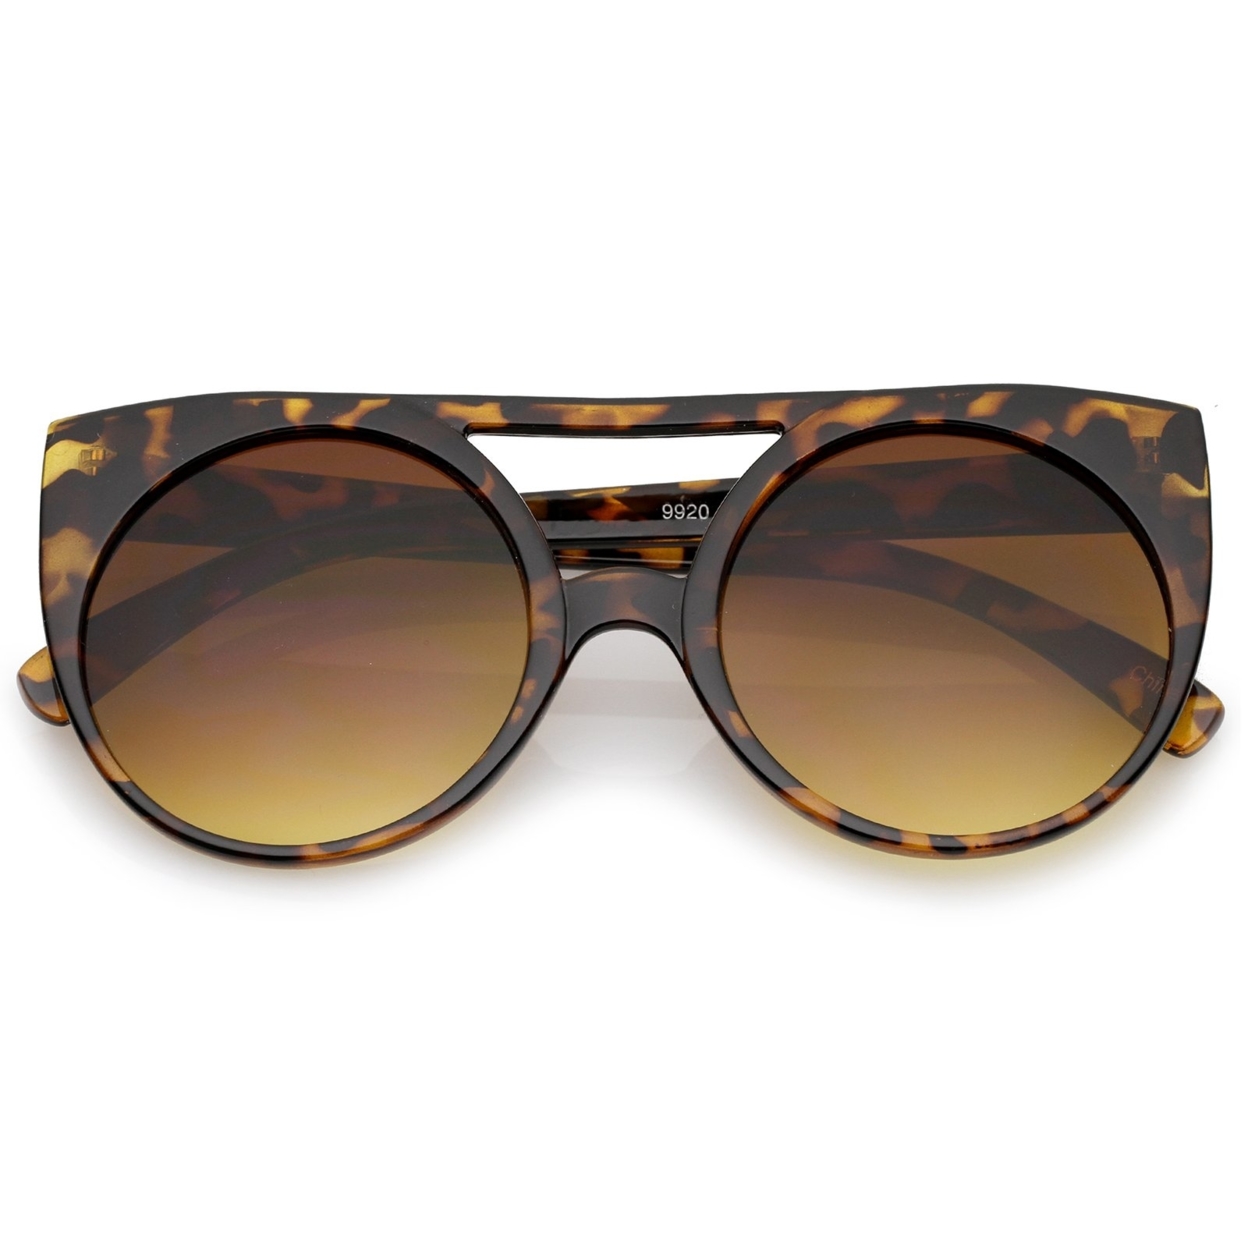 Women's Flat Top Cutout Round Lens Oversize Cat Eye Sunglasses 52mm - Black / Green